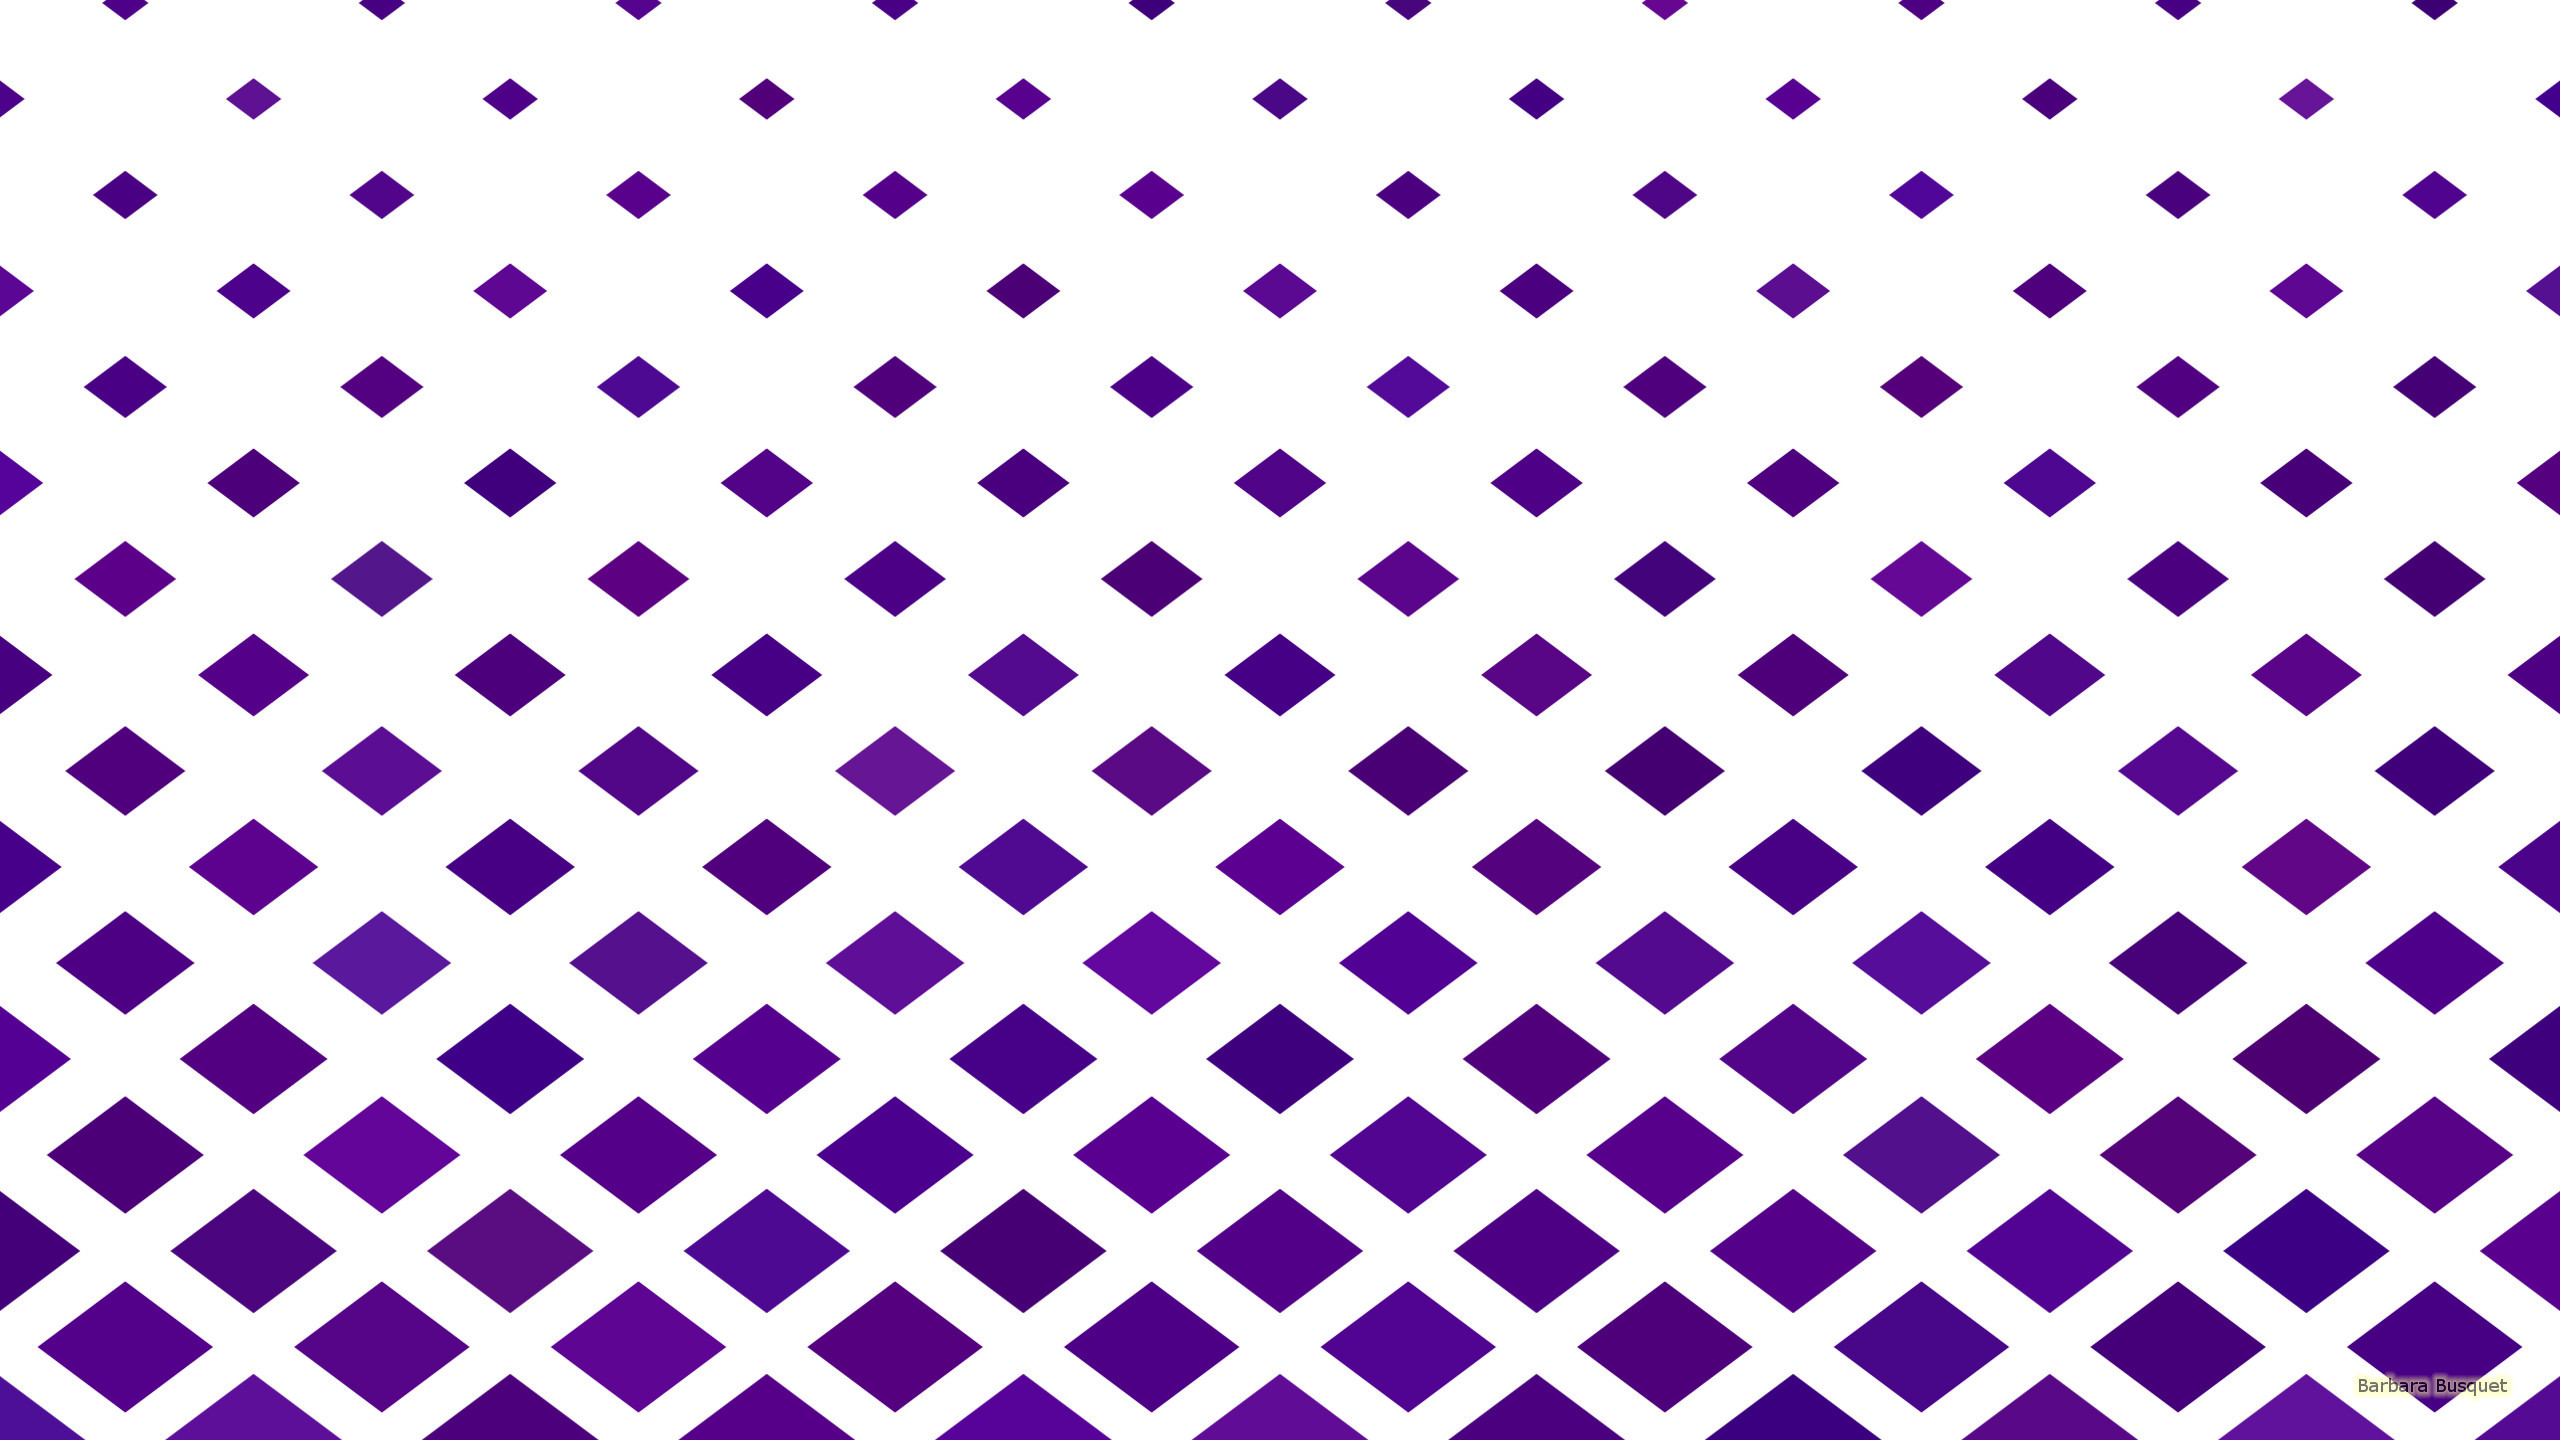 2560x1440 Purple white wallpaper with diamond shapes.